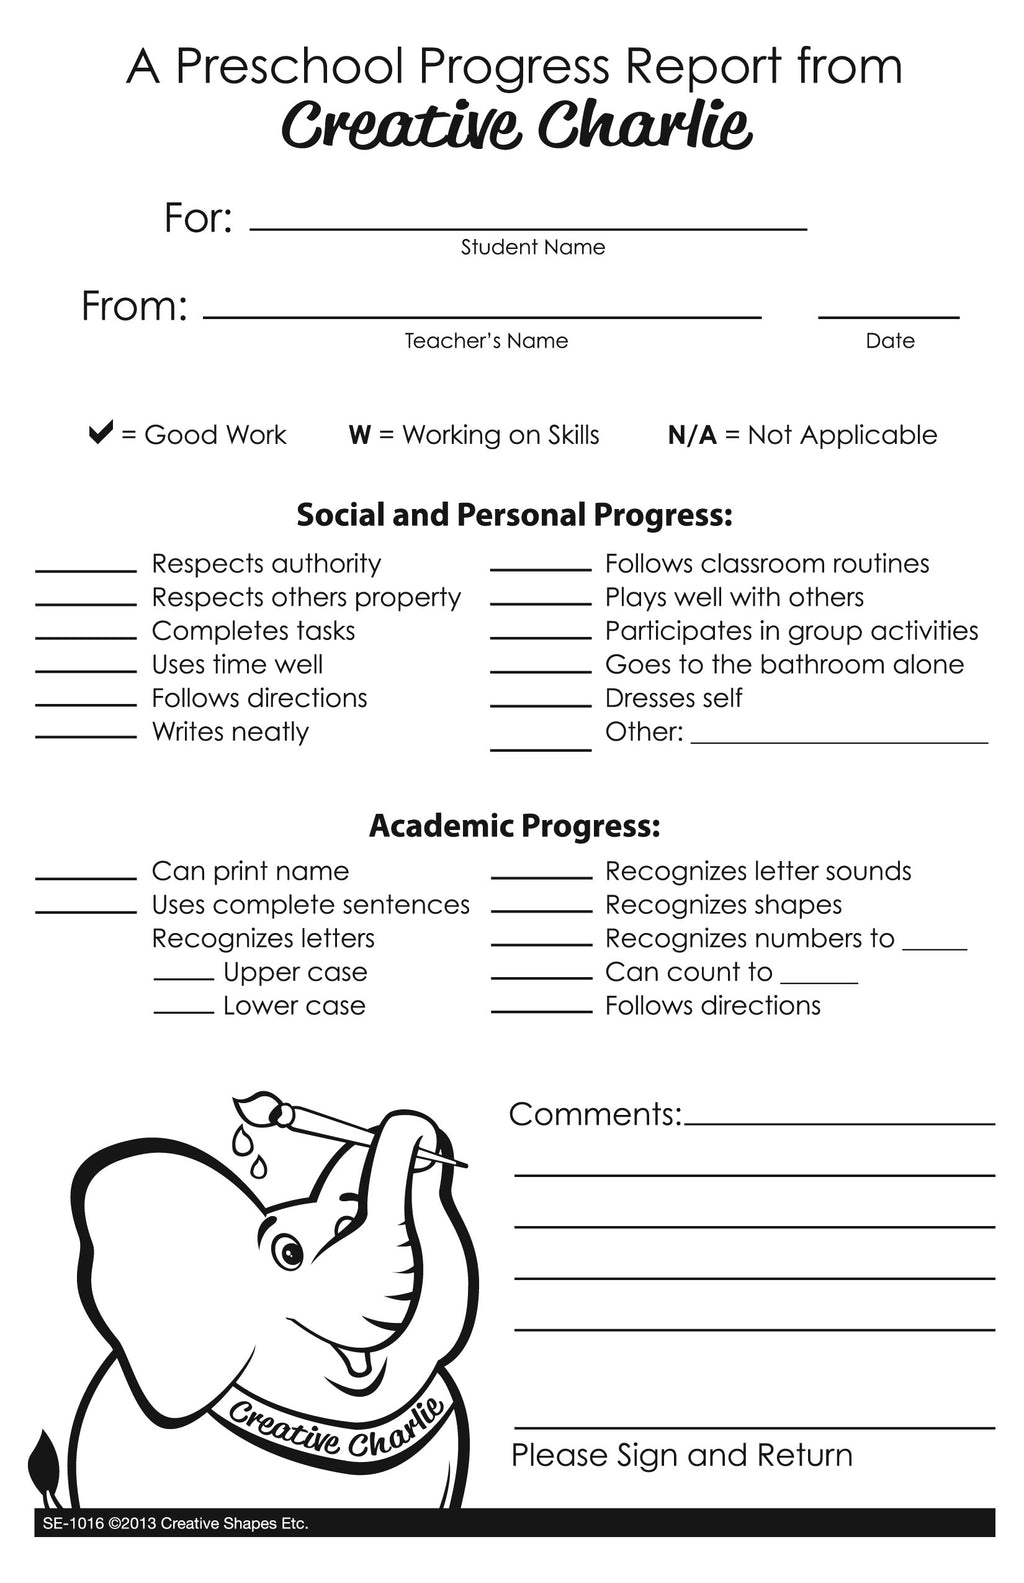 Notes from Teachers - Preschool Progress Report | Creative Shapes Etc.